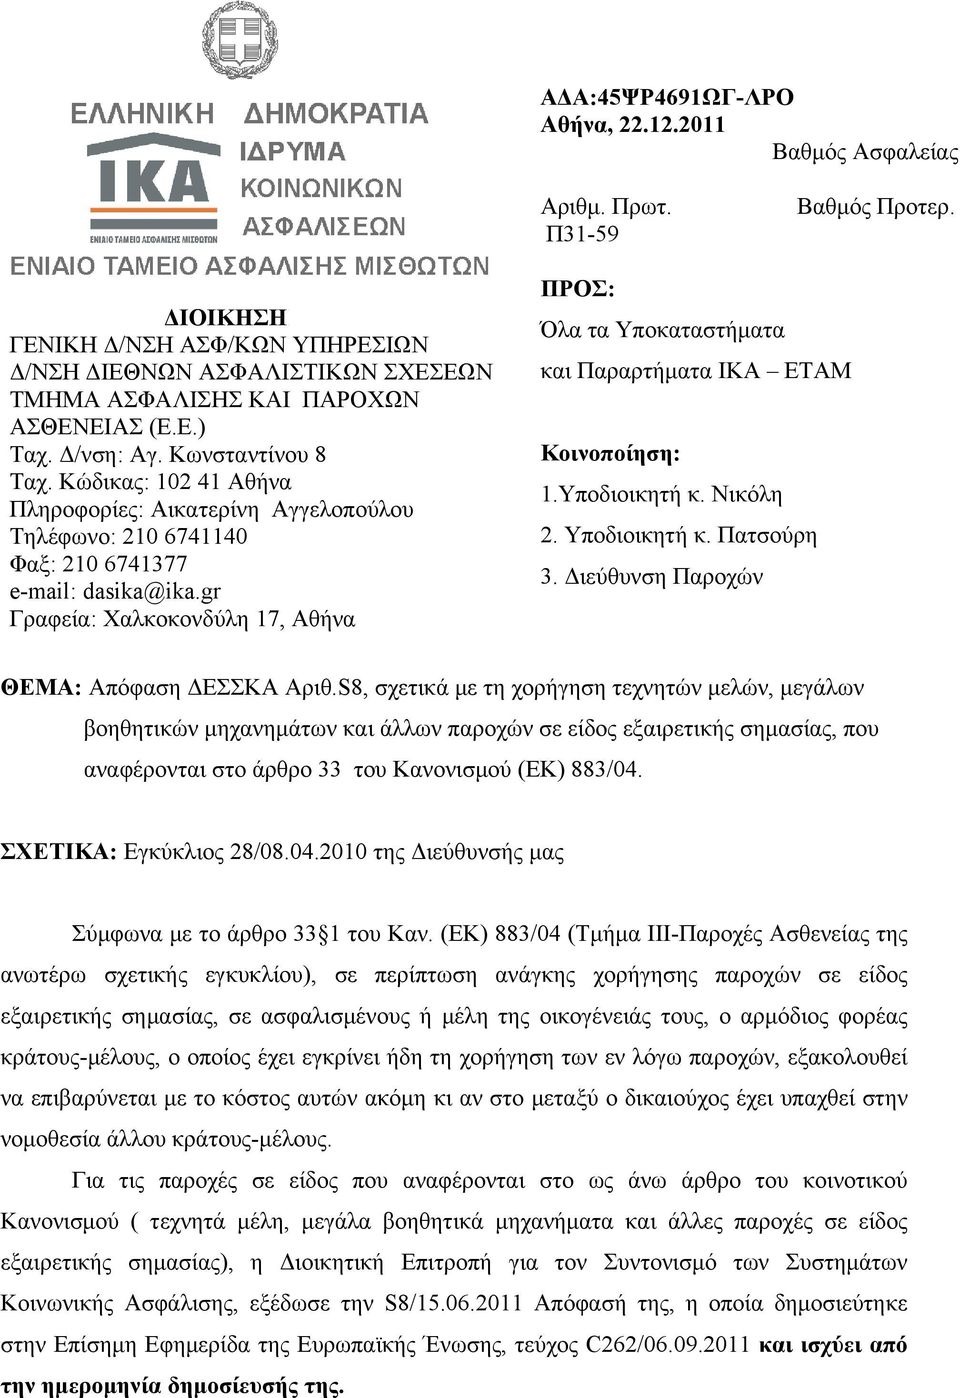 Kώδικας: 102 41 Αθήνα Πληροφορίες: Αικατερίνη Αγγελοπούλου Τηλέφωνο: 210 6741140 Φαξ: 210 6741377 e-mail: dasika@ika.